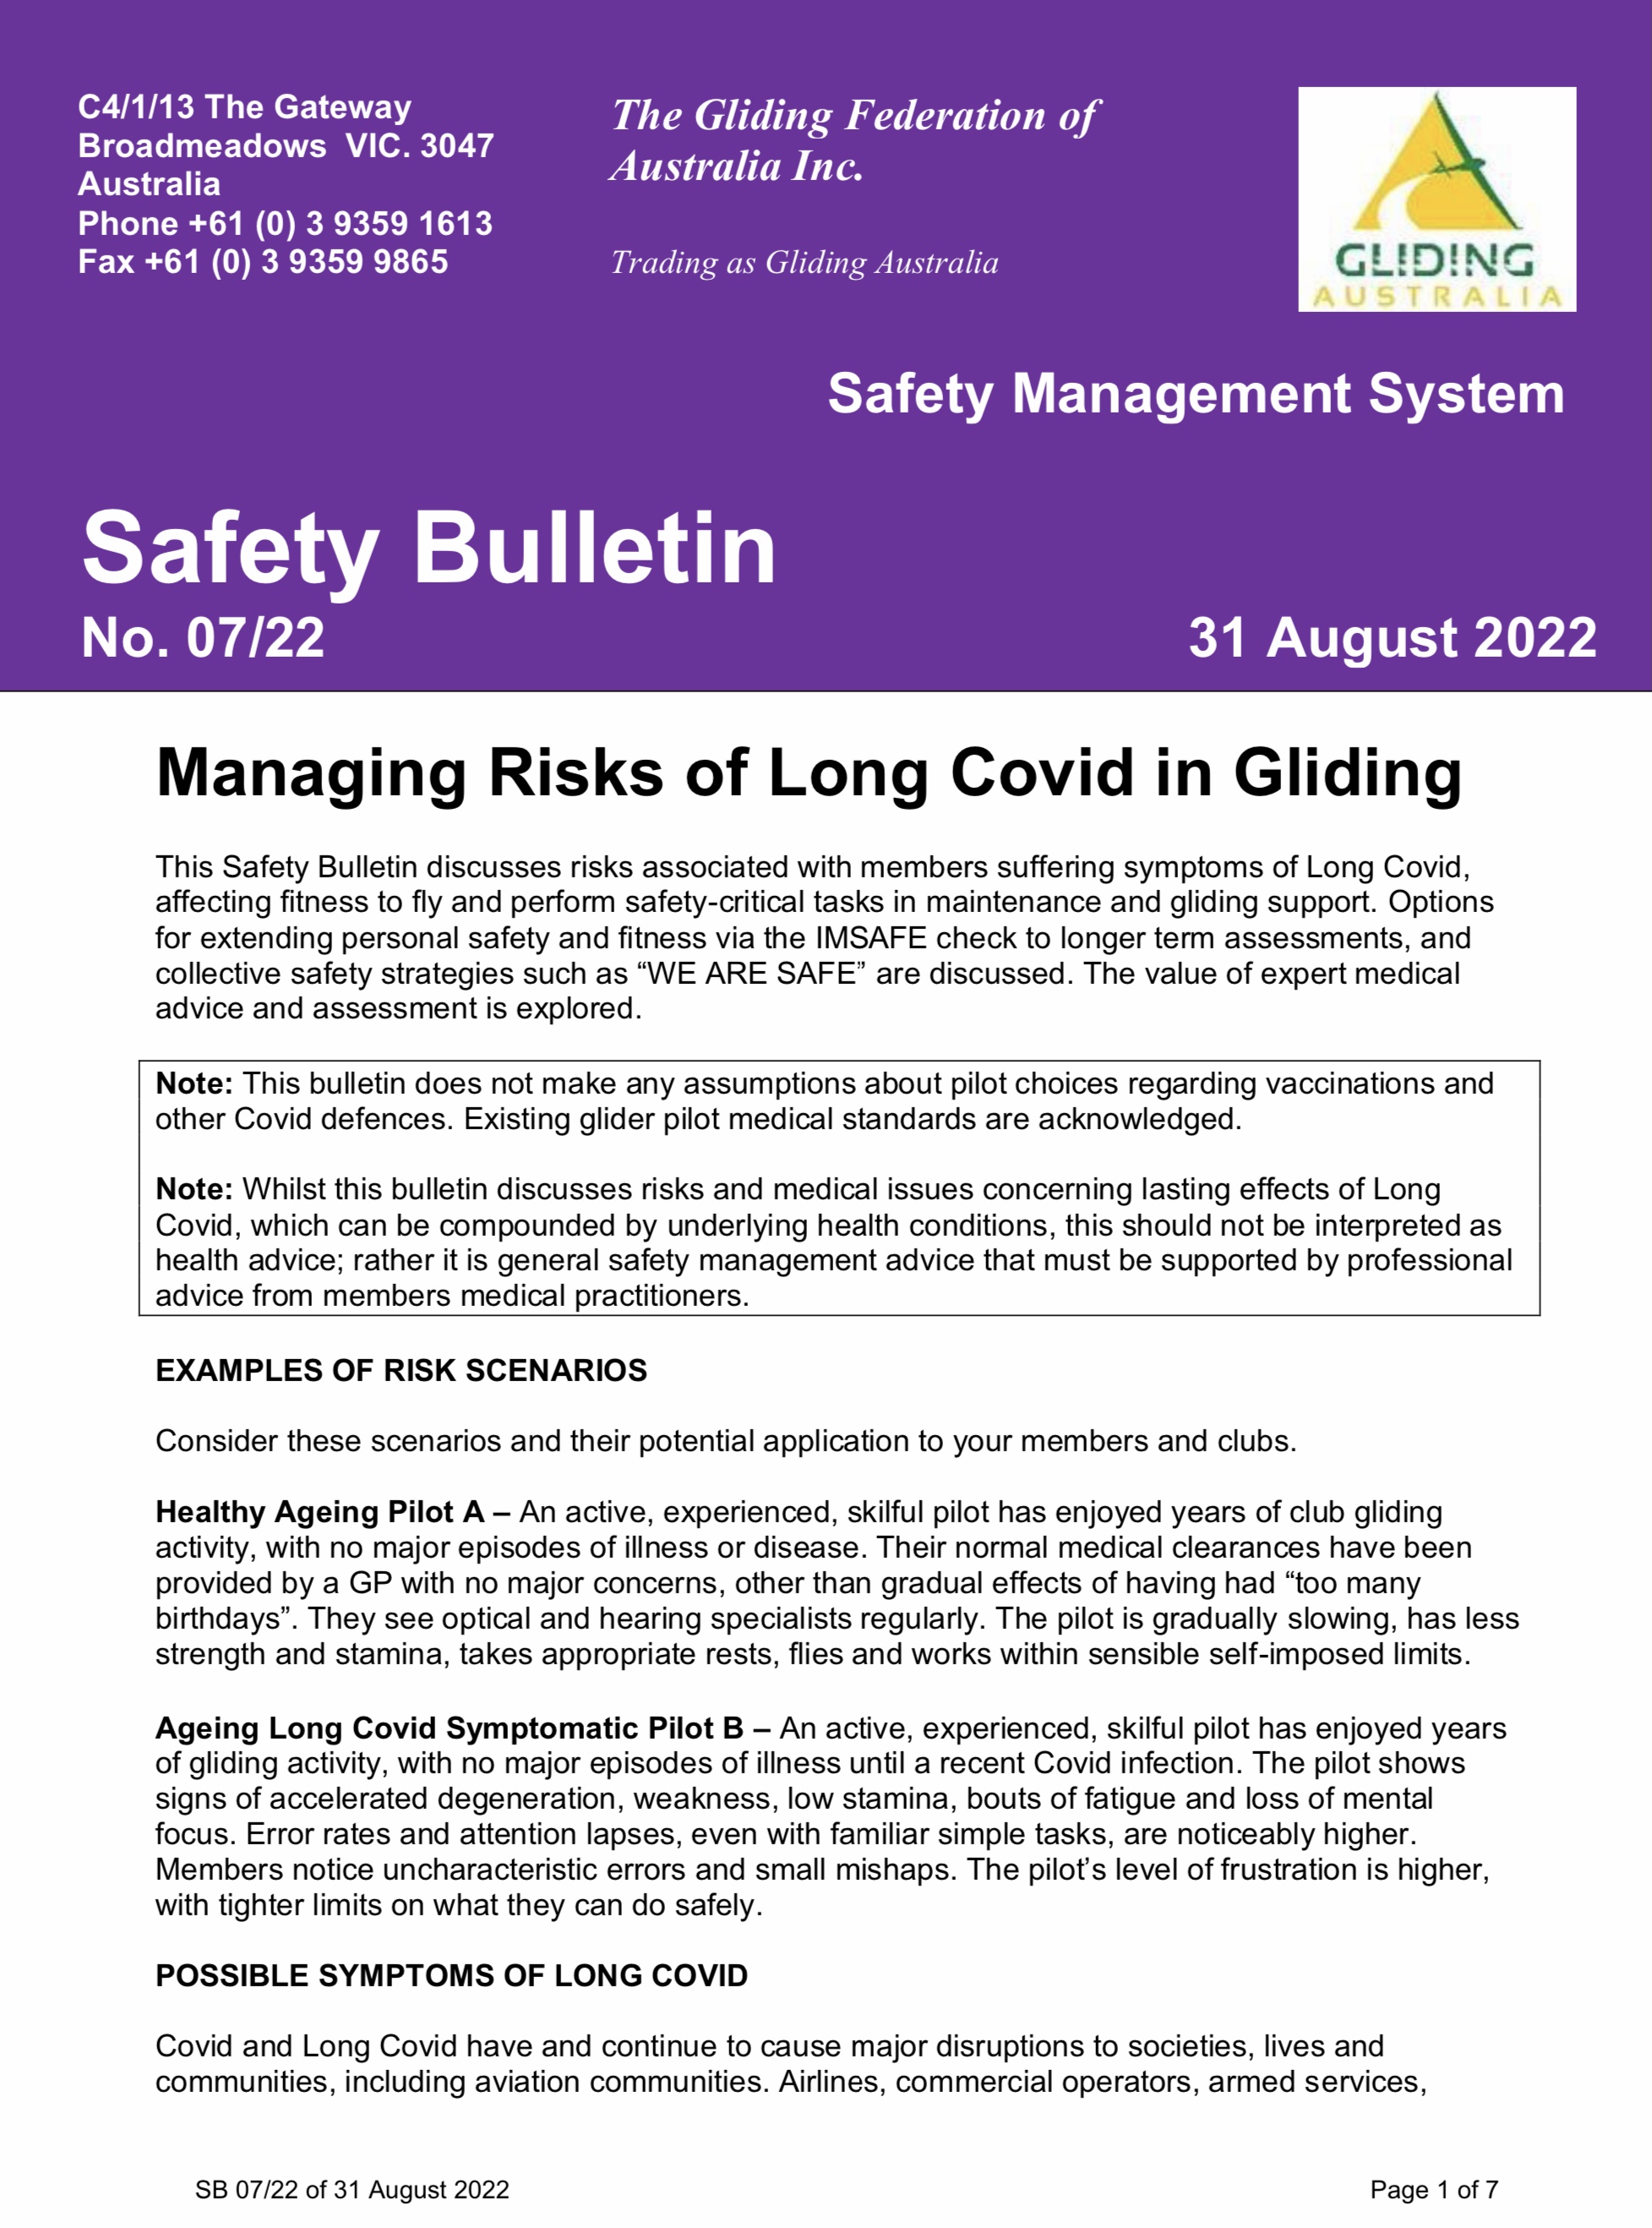 SB 07 22 Managing Risks of Long Covid in Gliding